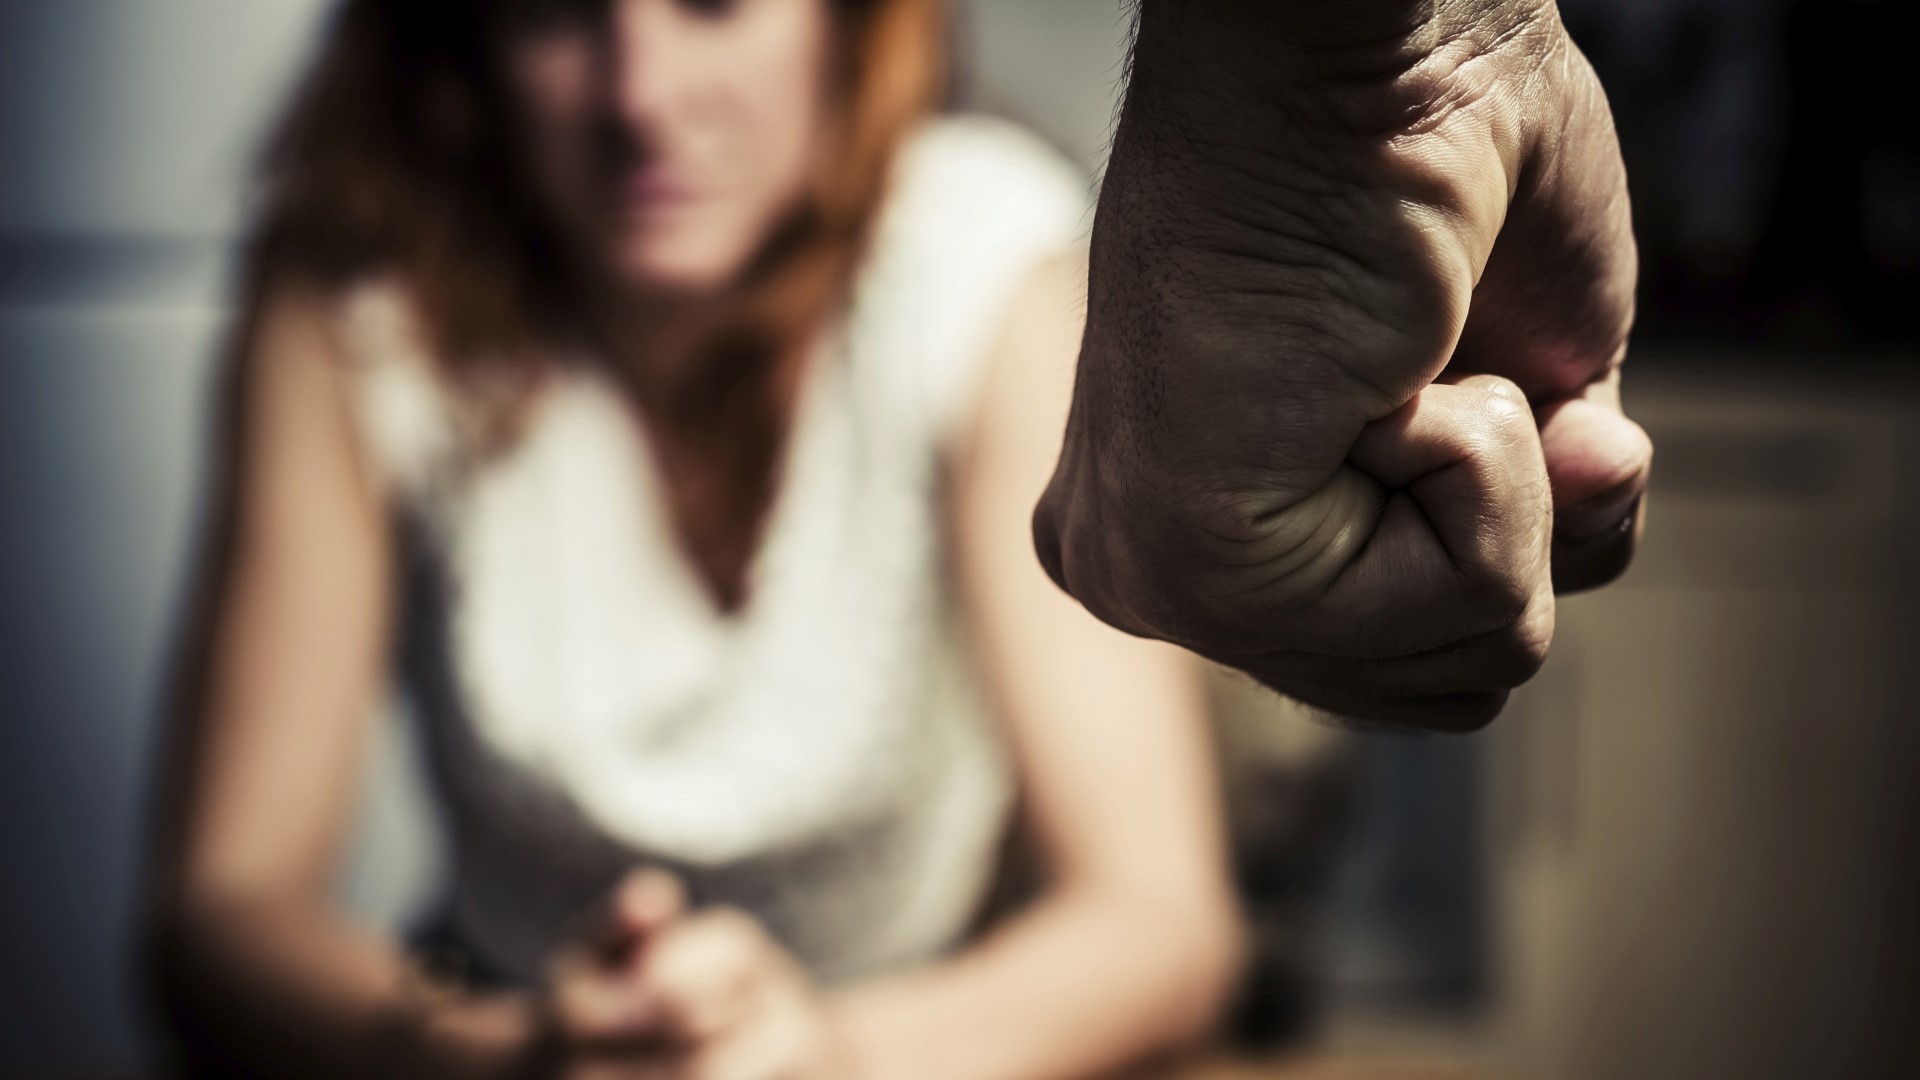 Felony vs Misdemeanor Domestic Violence Explained